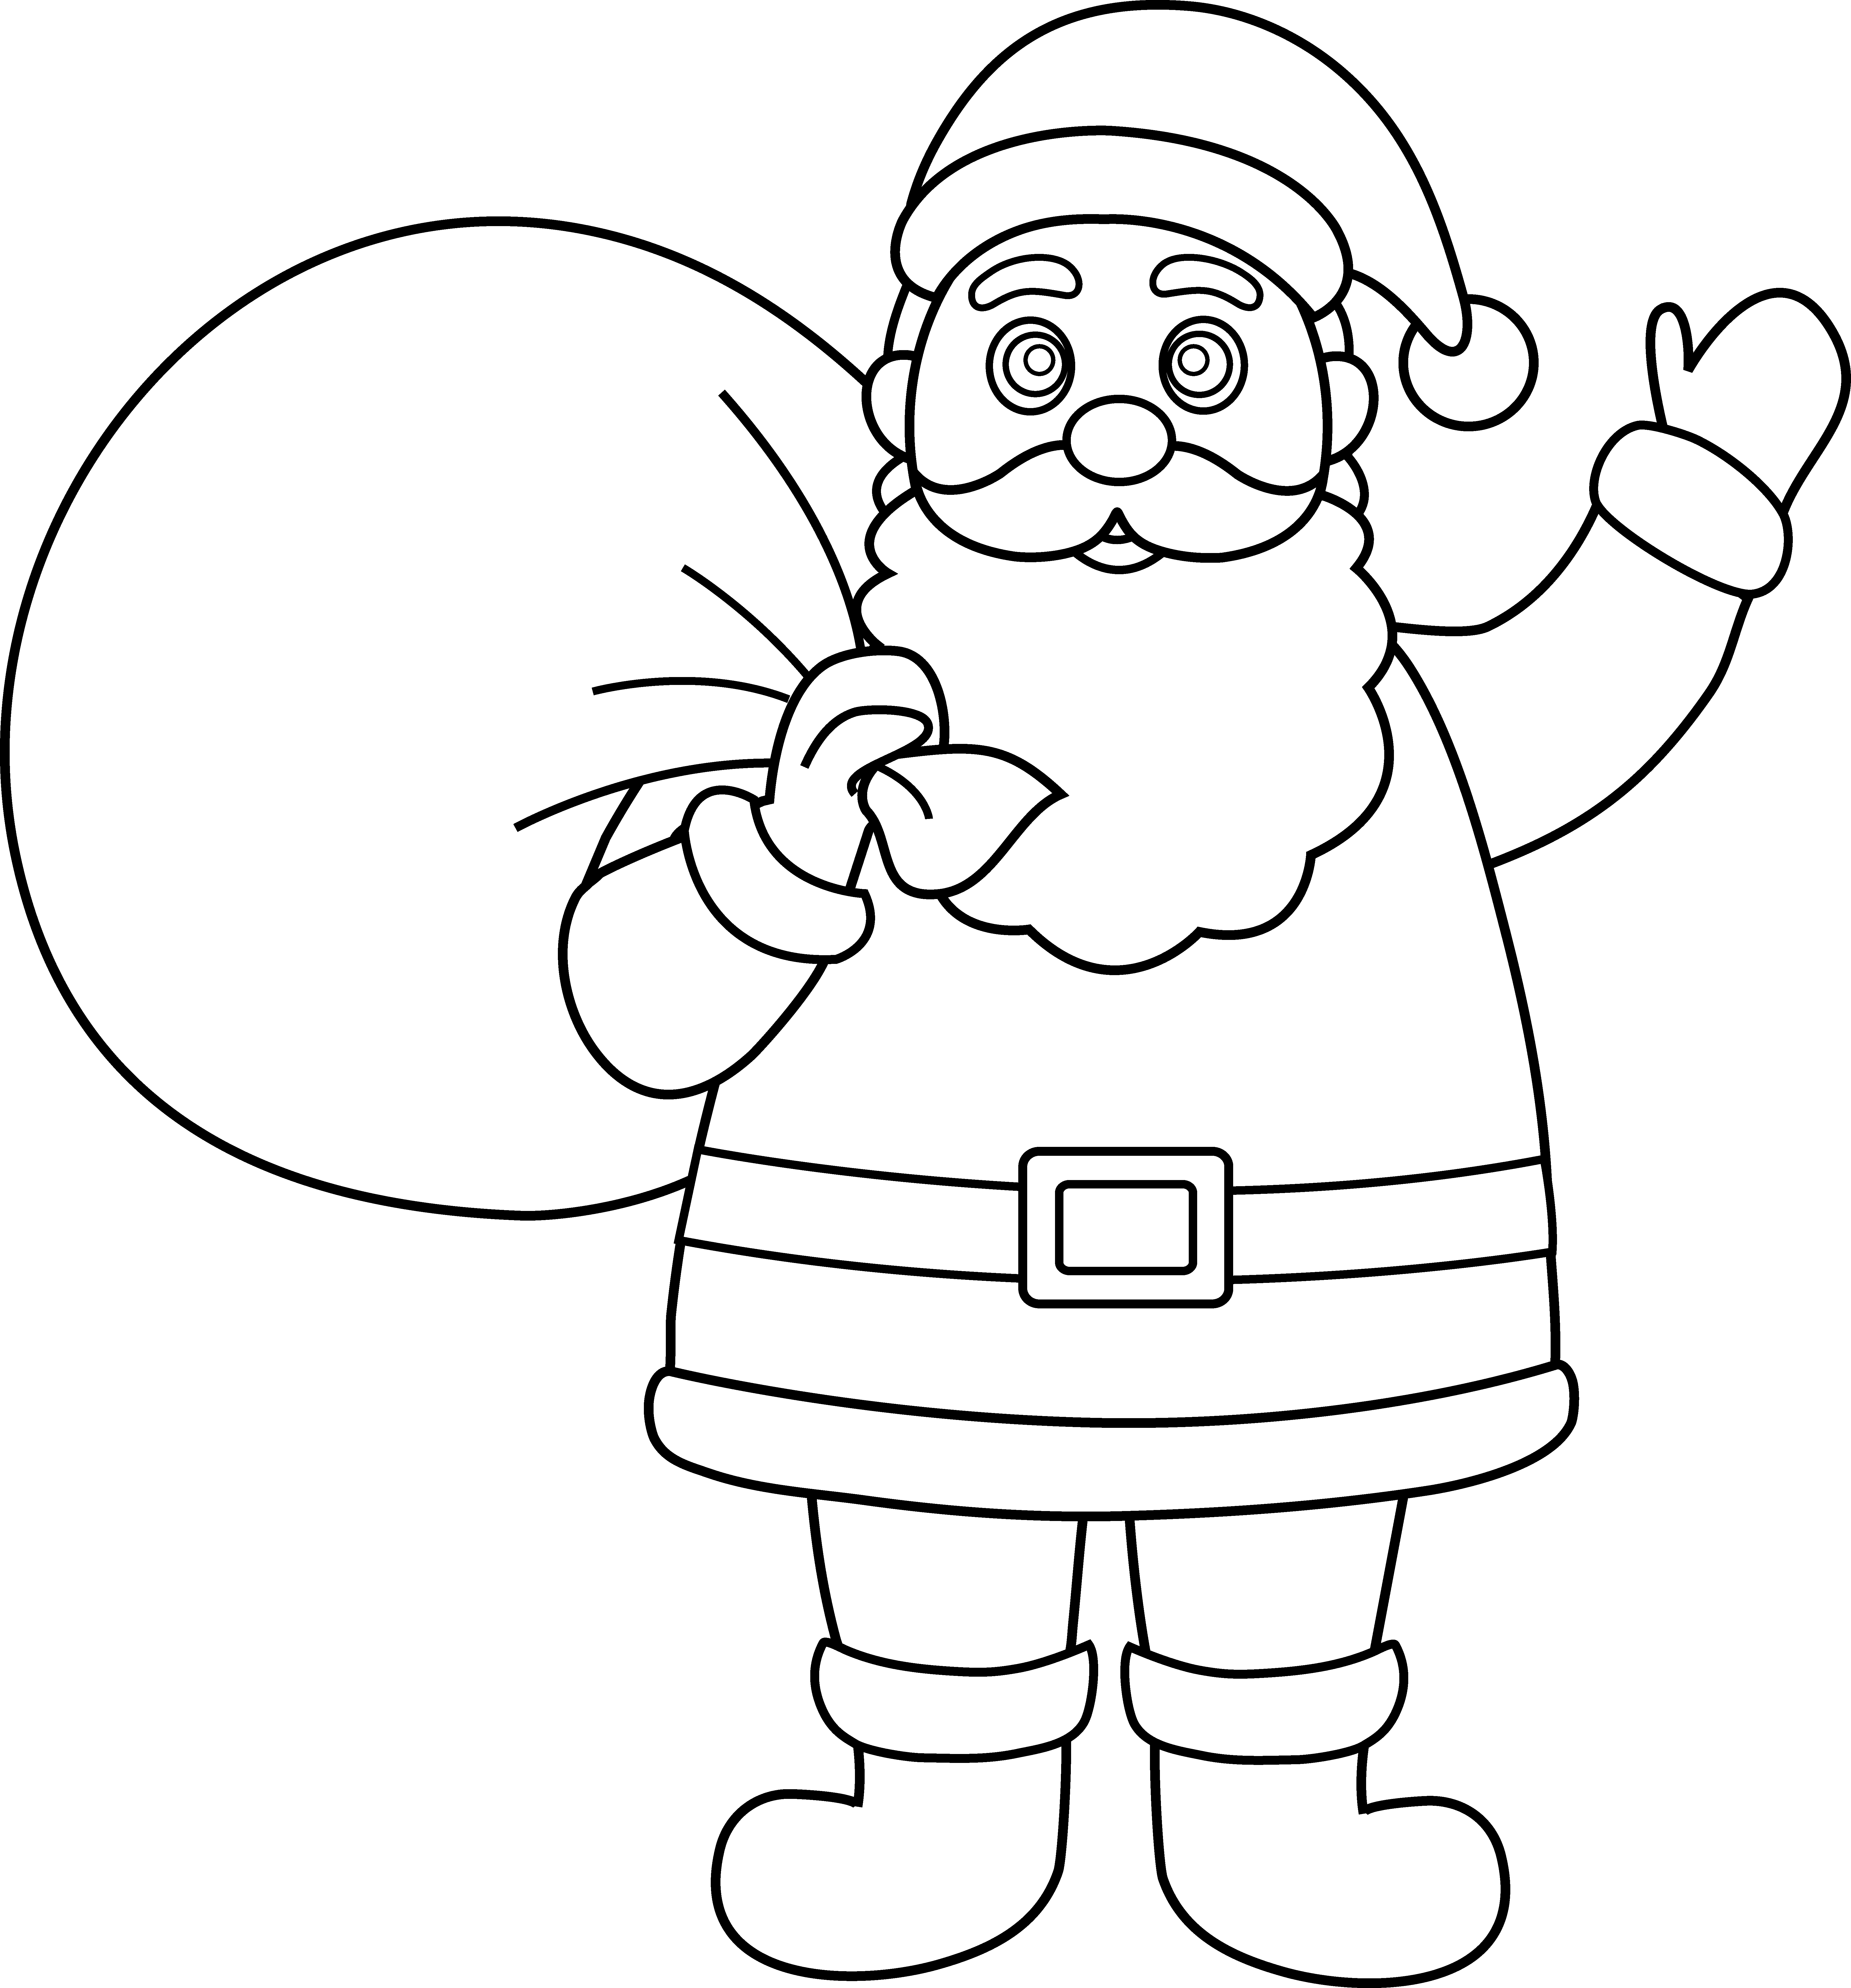 12521 Santa Claus Line Drawing Images Stock Photos  Vectors   Shutterstock